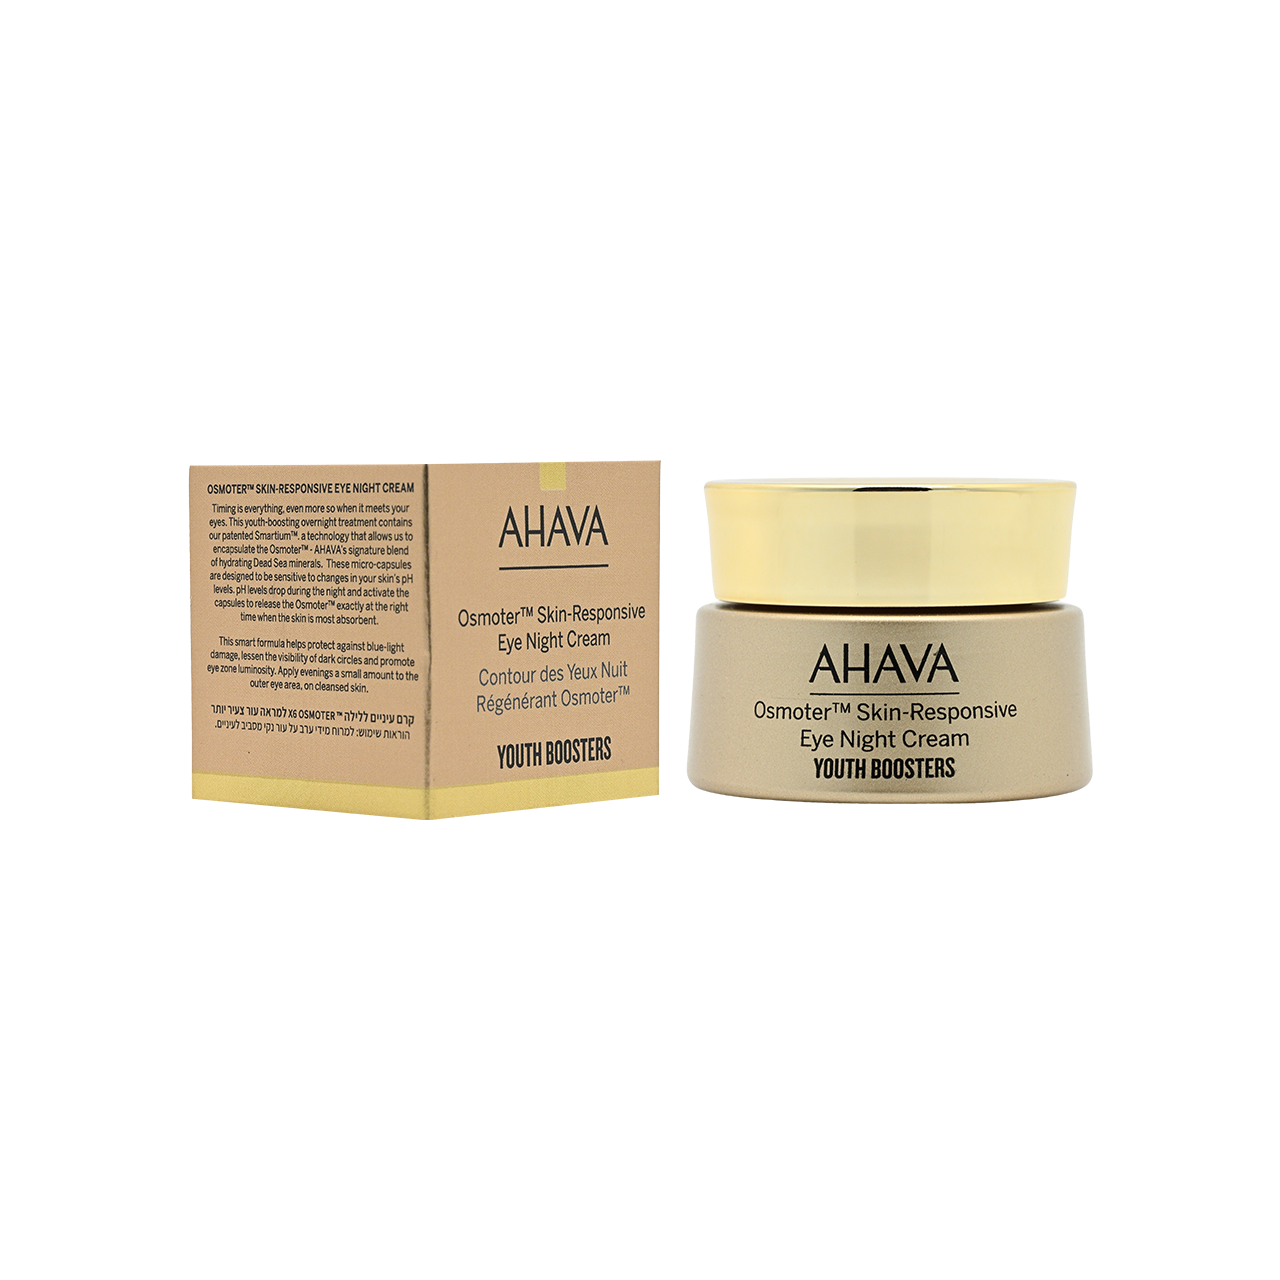 AHAVA Osmoter™ Skin-Responsive Eye Night Cream 15ml | Sasa Global eShop